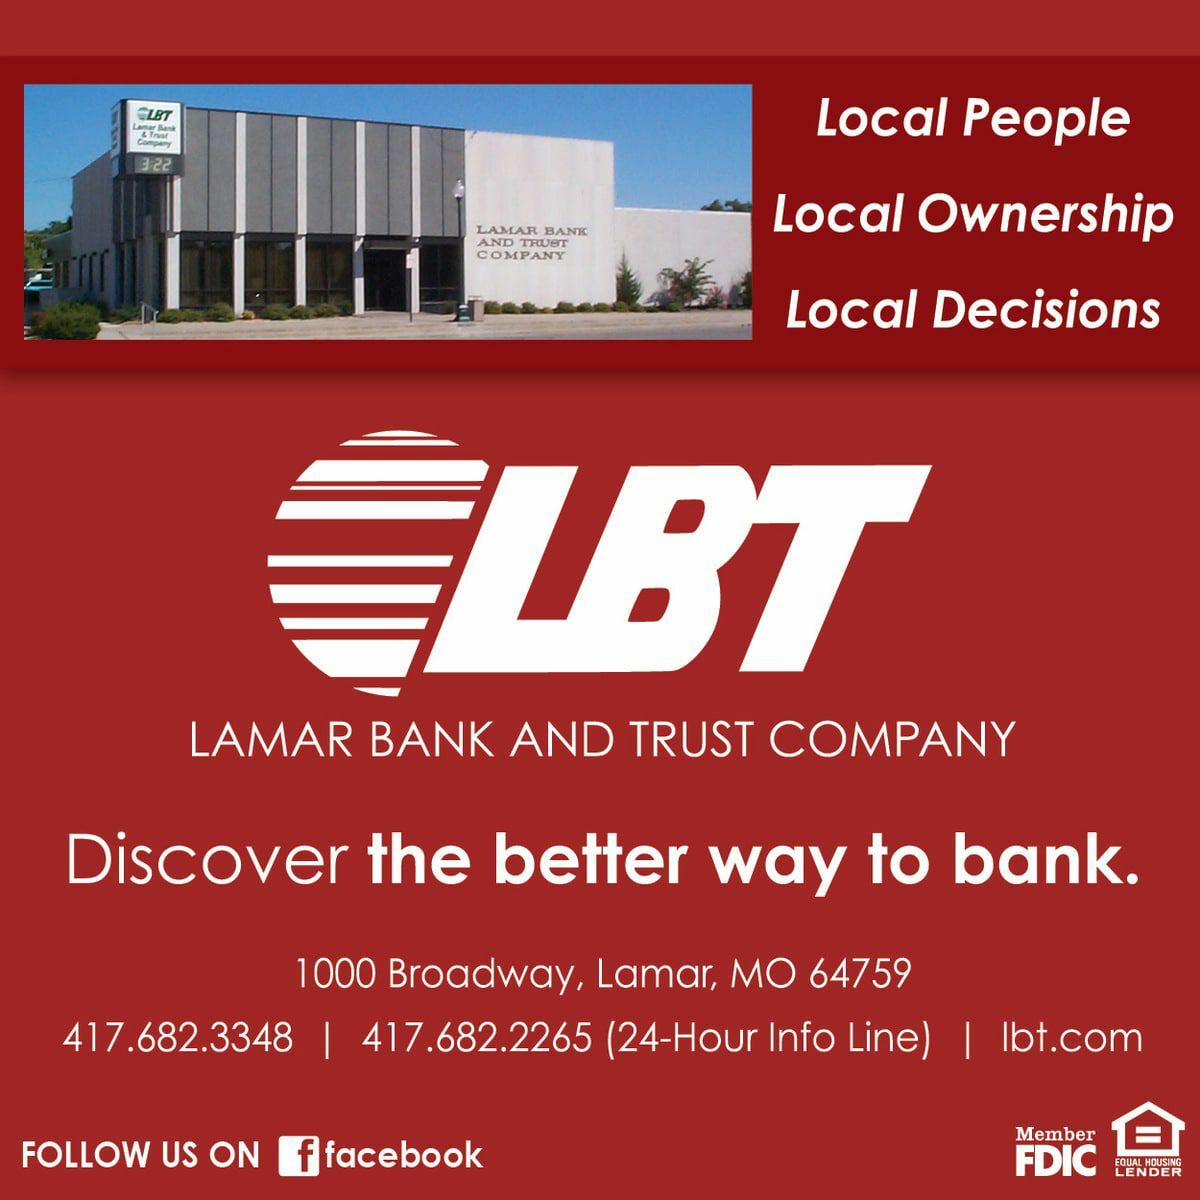 Lamar Bank & Trust Company